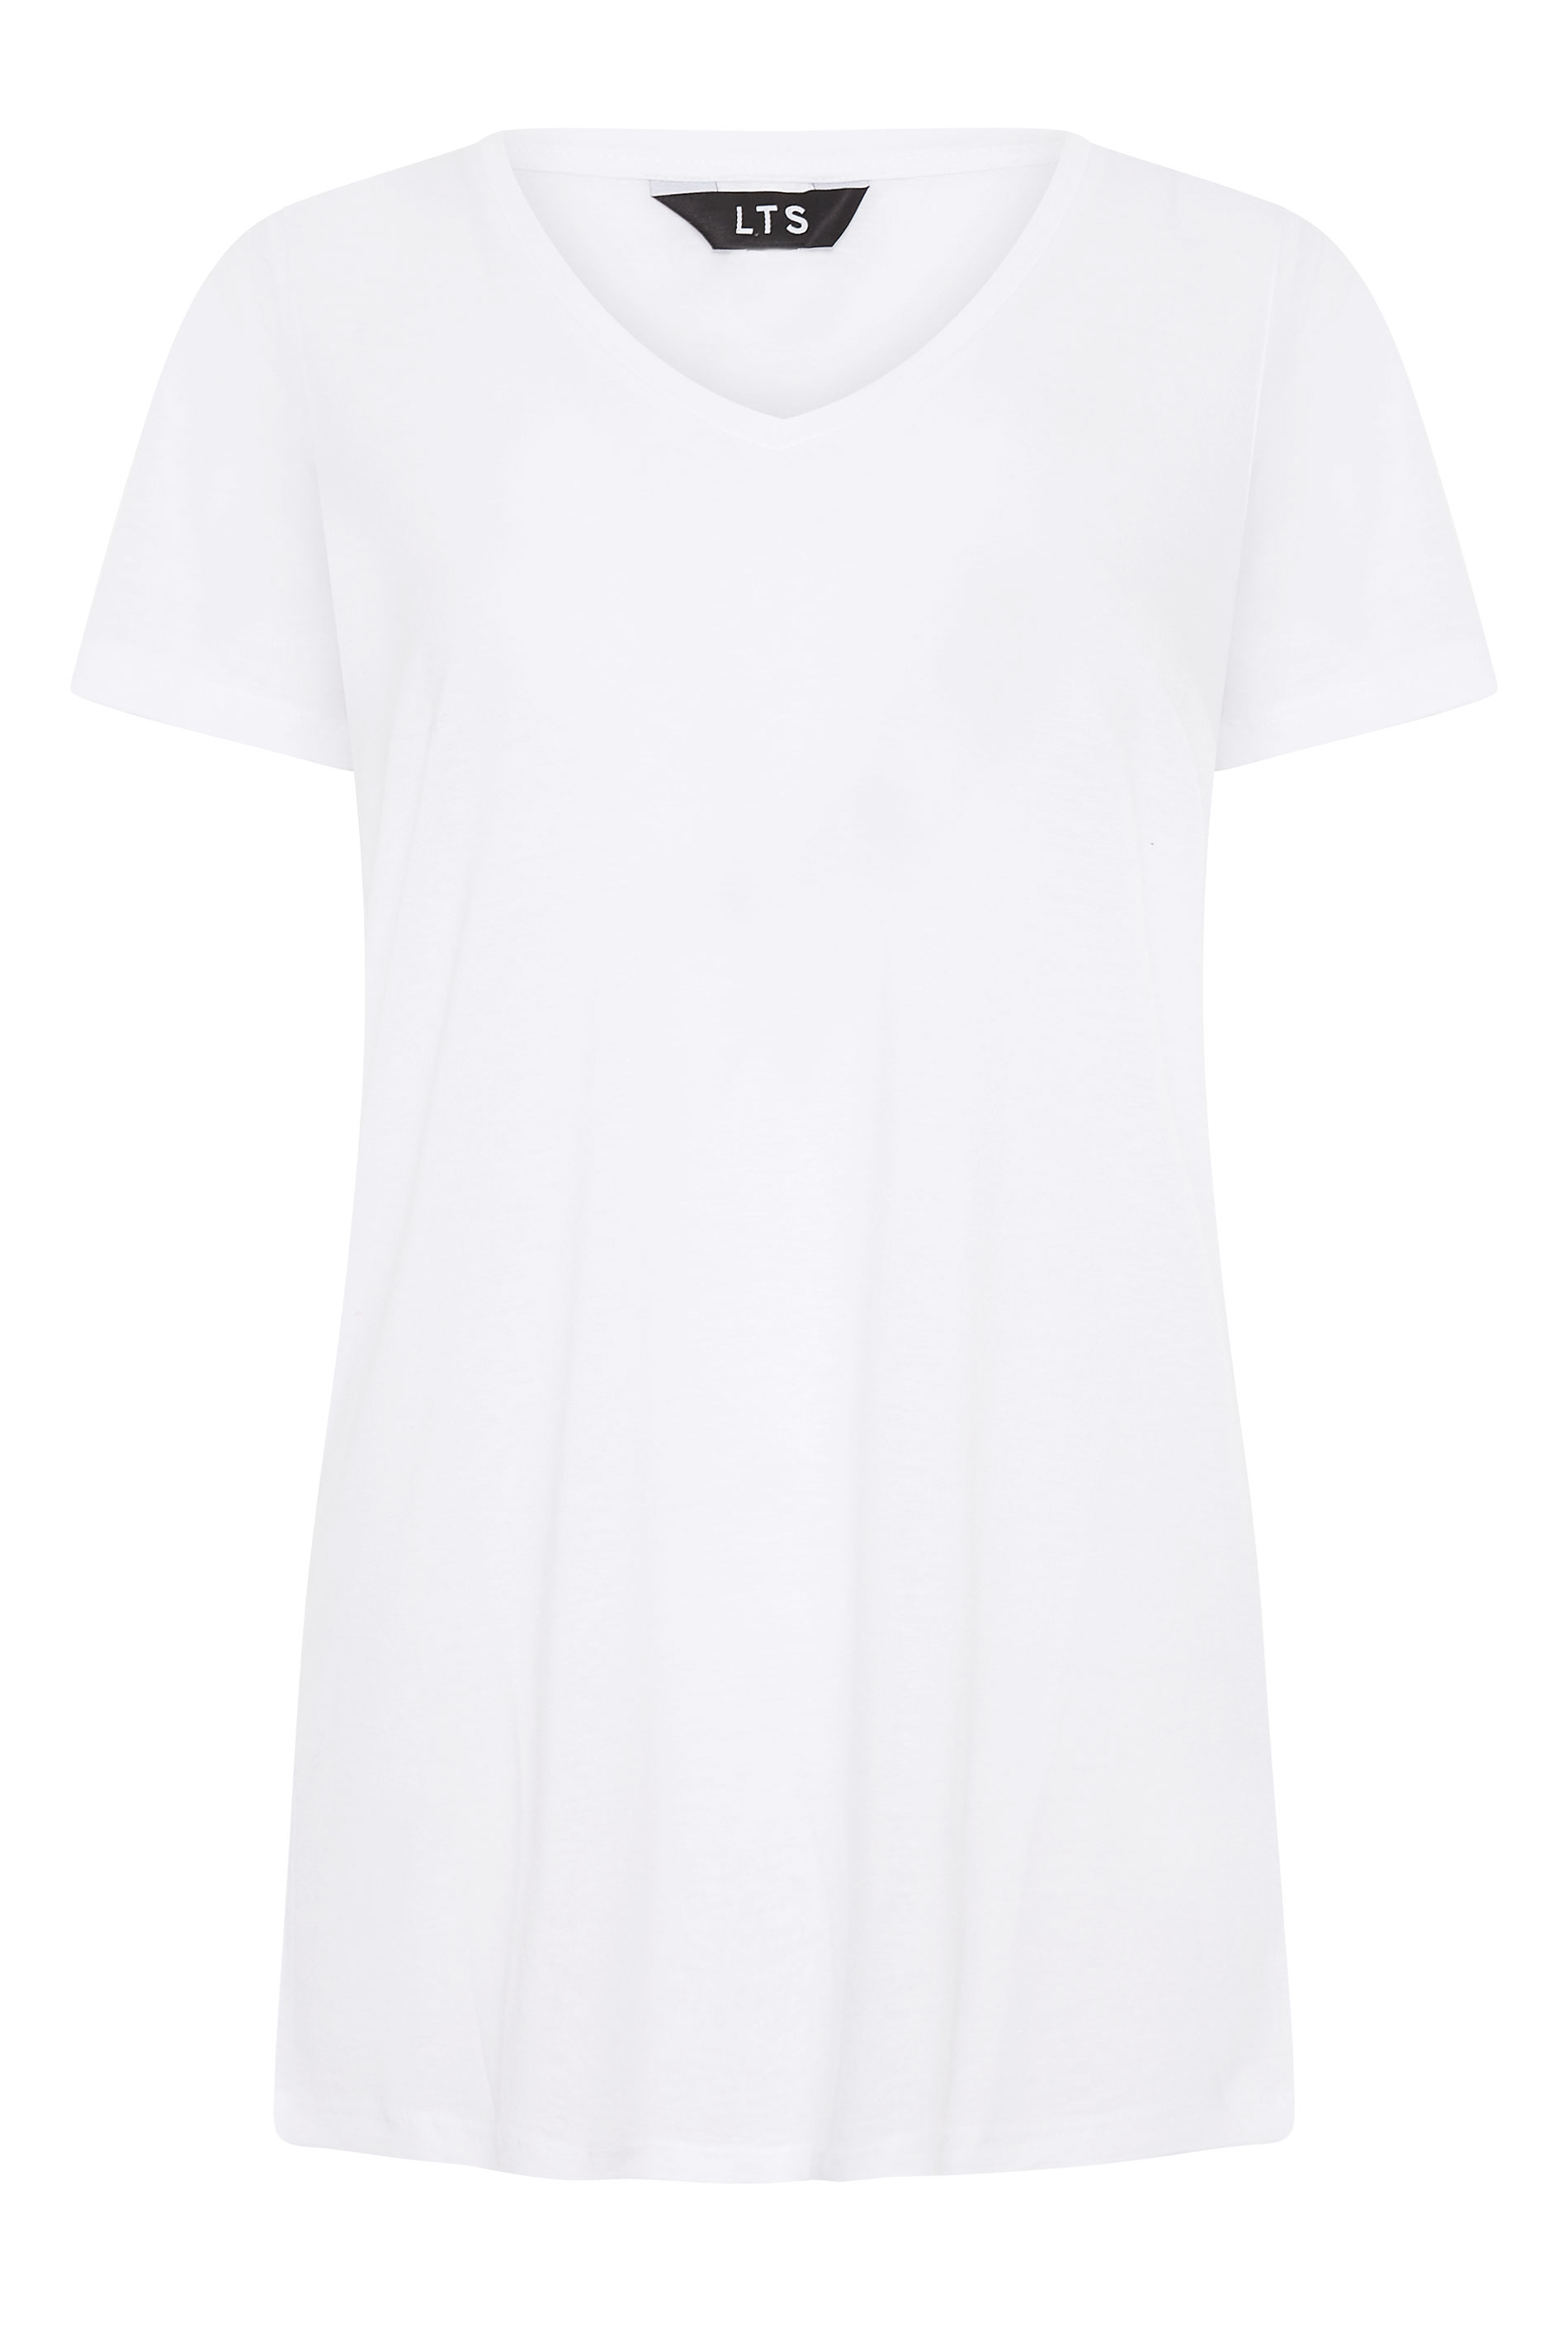 LTS White Linen Blend V-Neck T-Shirt | Long Tall Sally